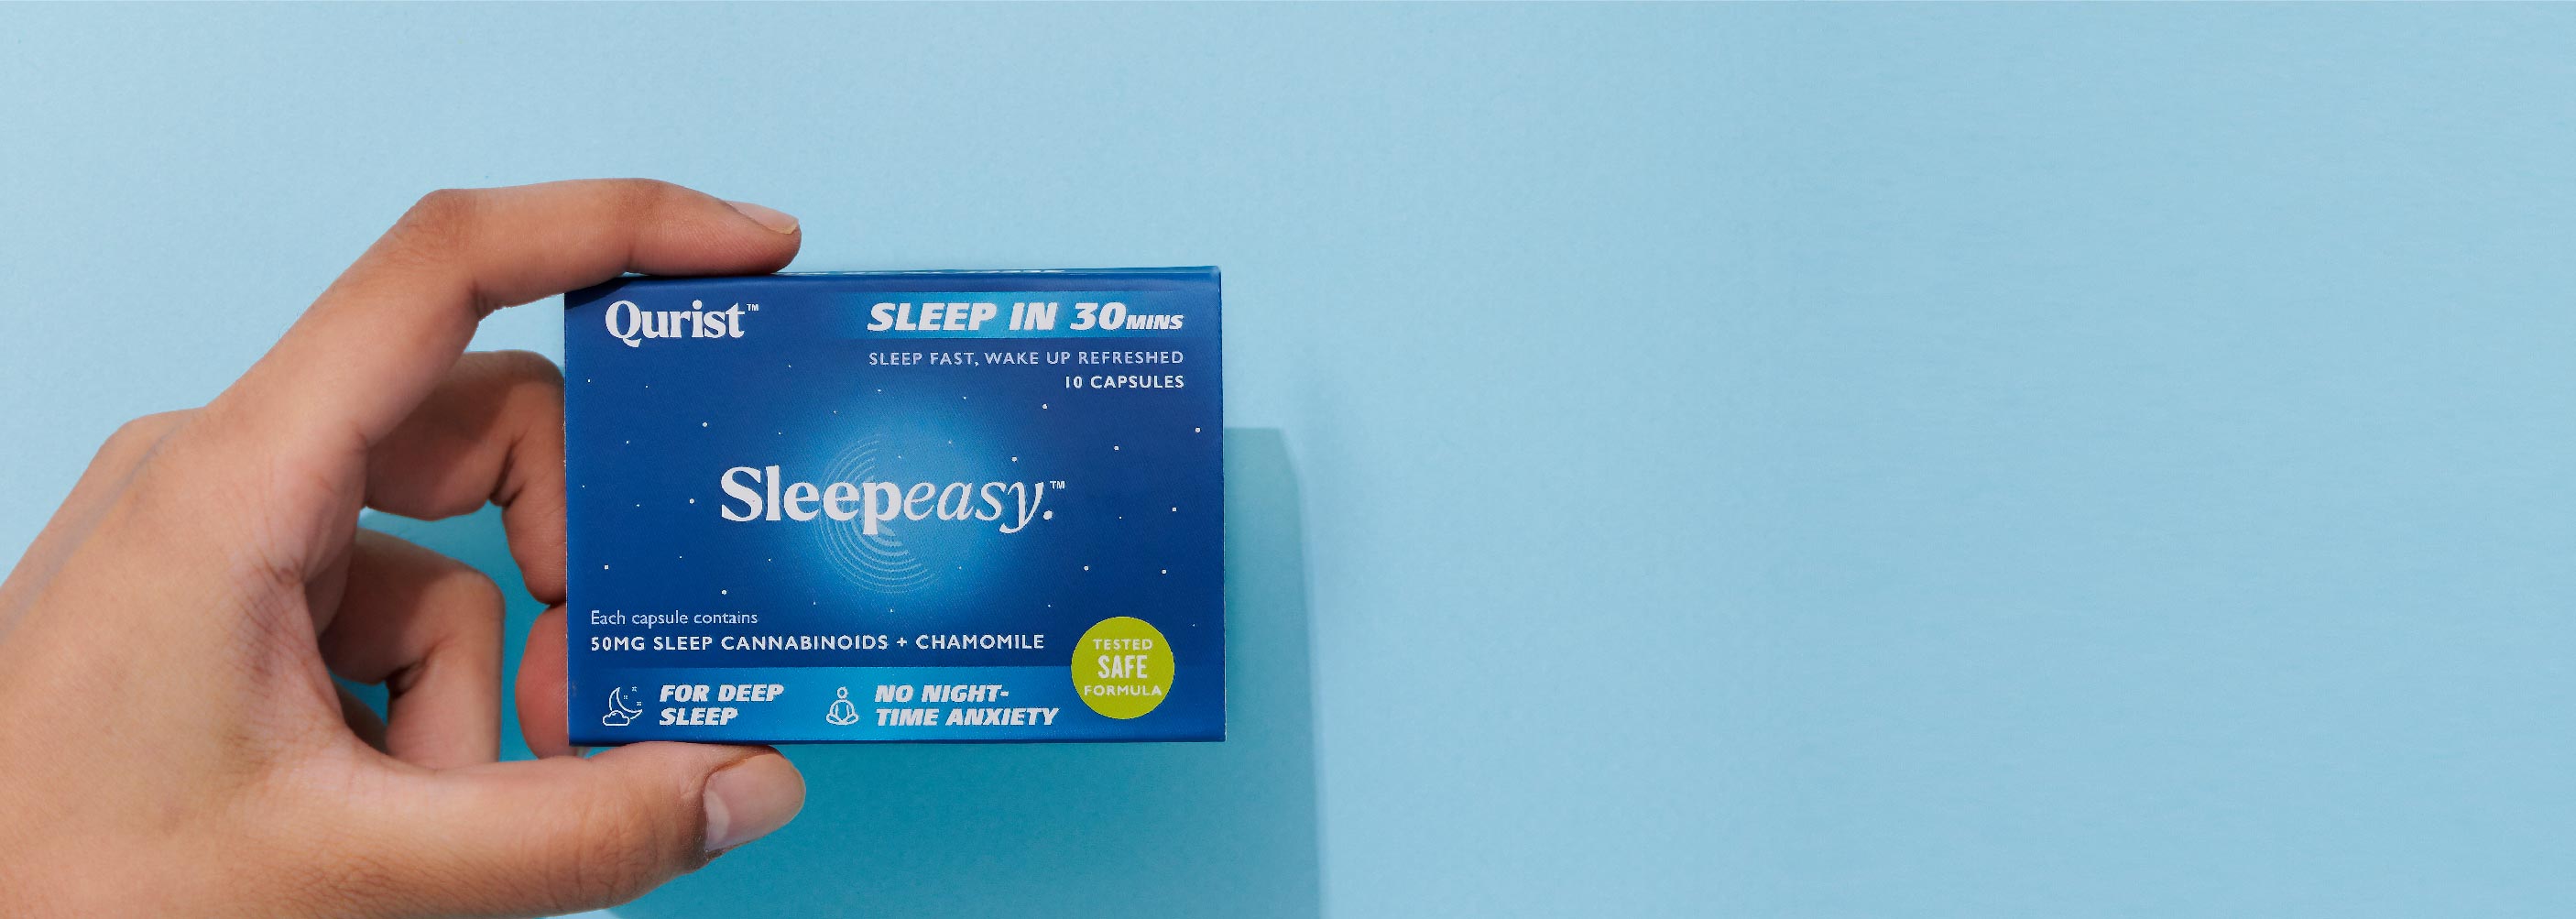 SleepEasy - Capsule for Deep Sleep